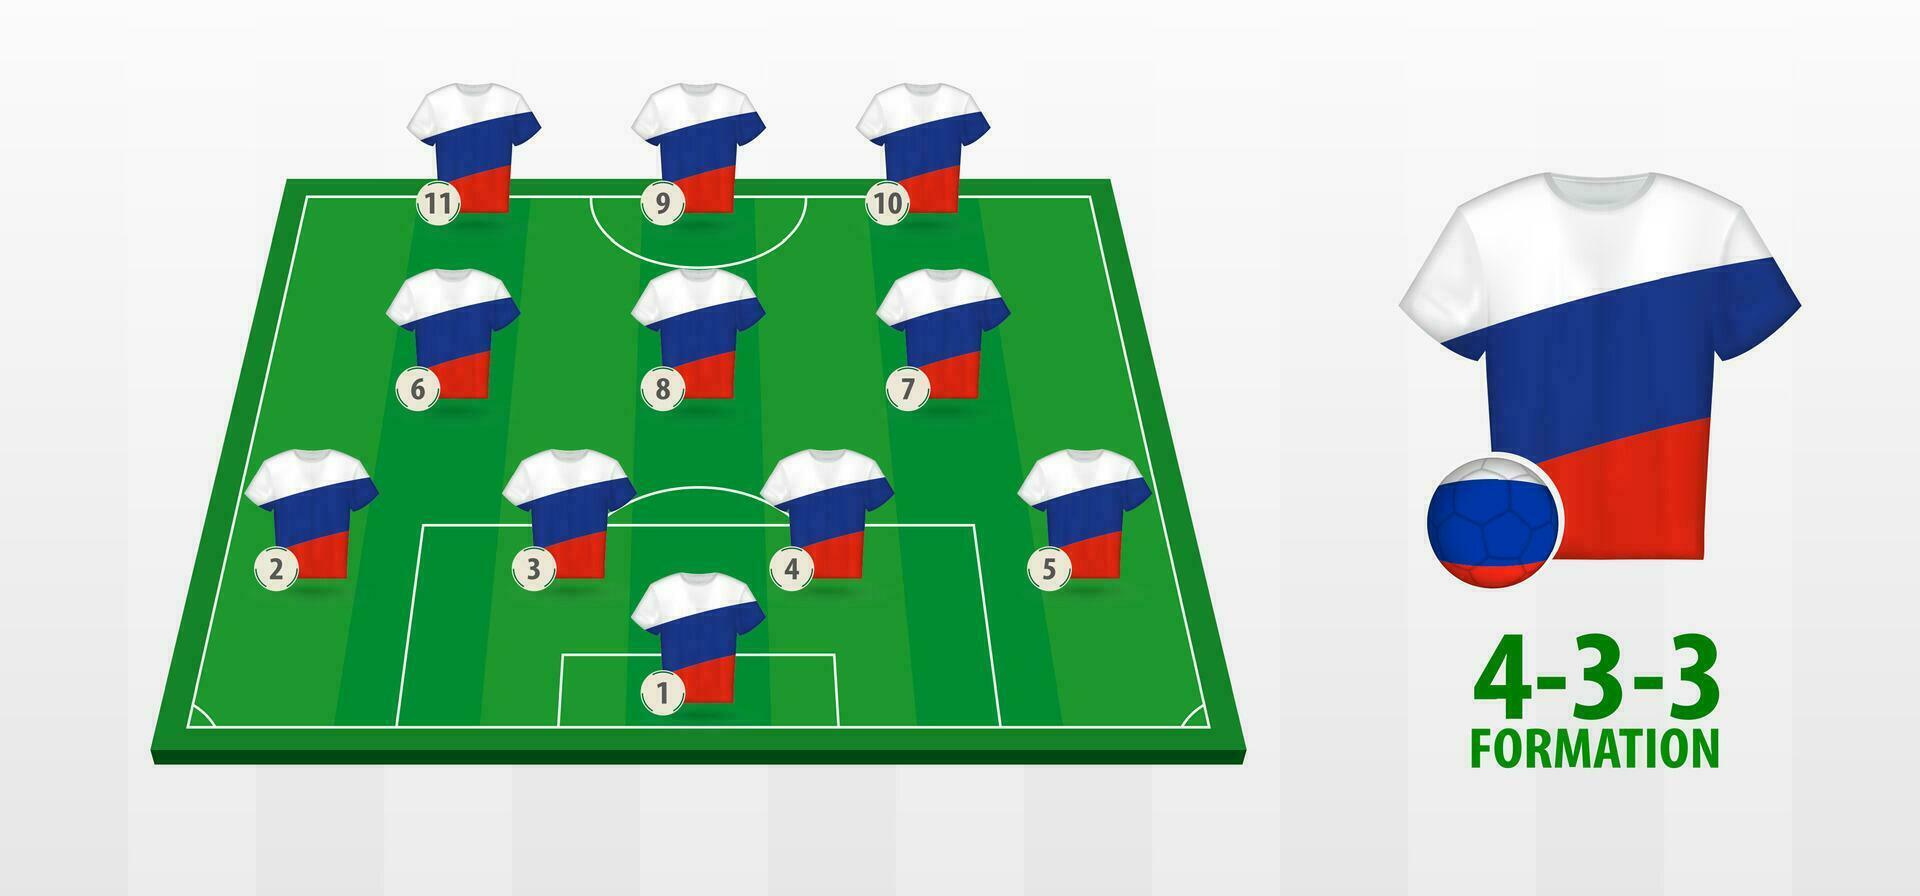 Russia National Football Team Formation on Football Field. vector